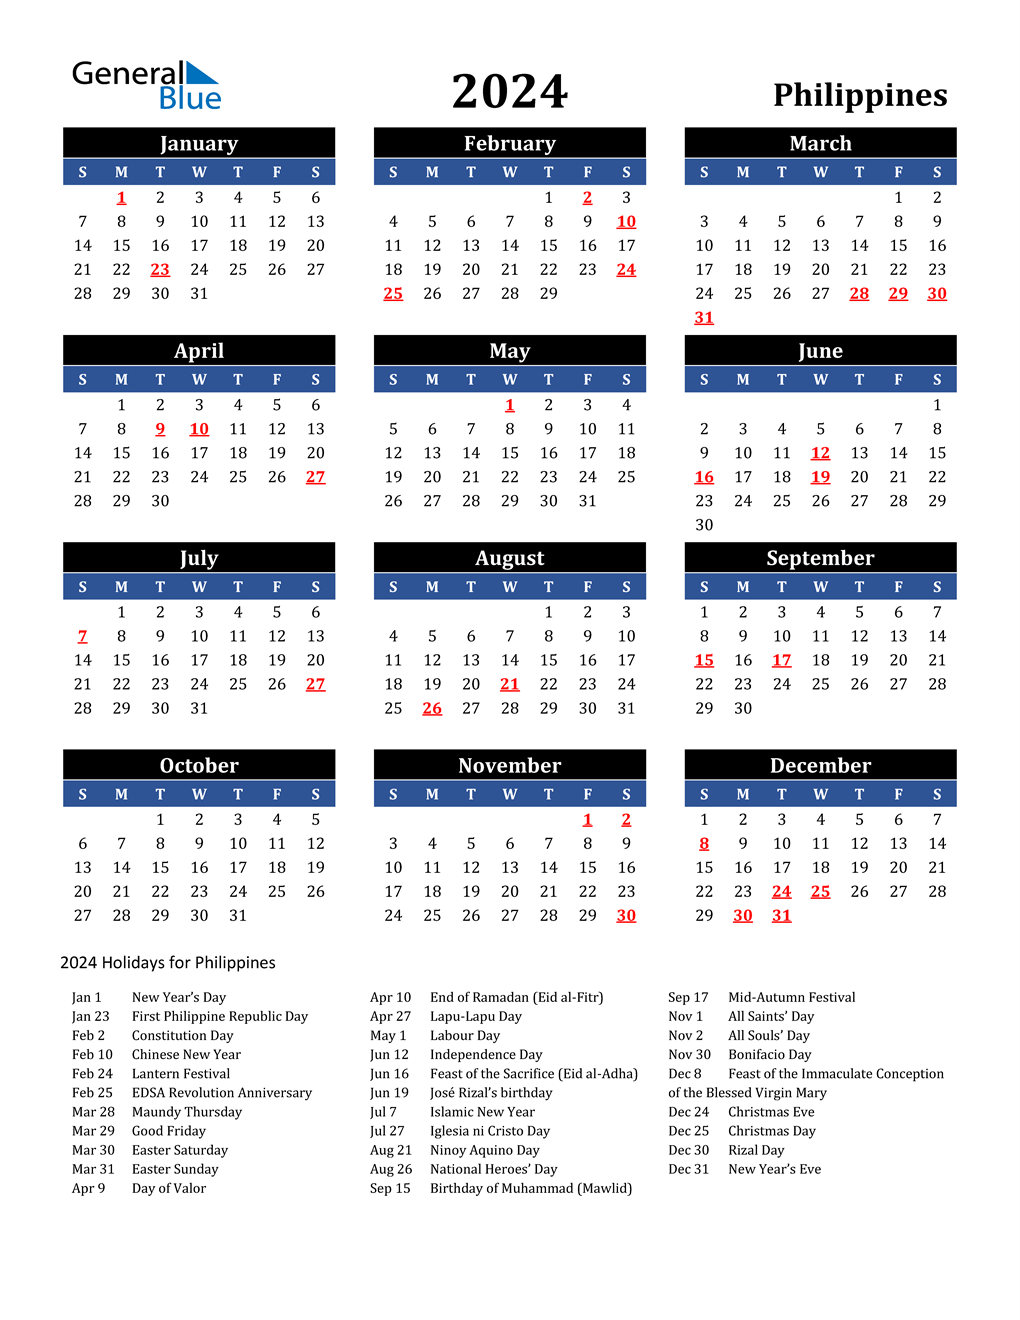 2023 Philippines Calendar With Holidays 2023 Philippines Calendar